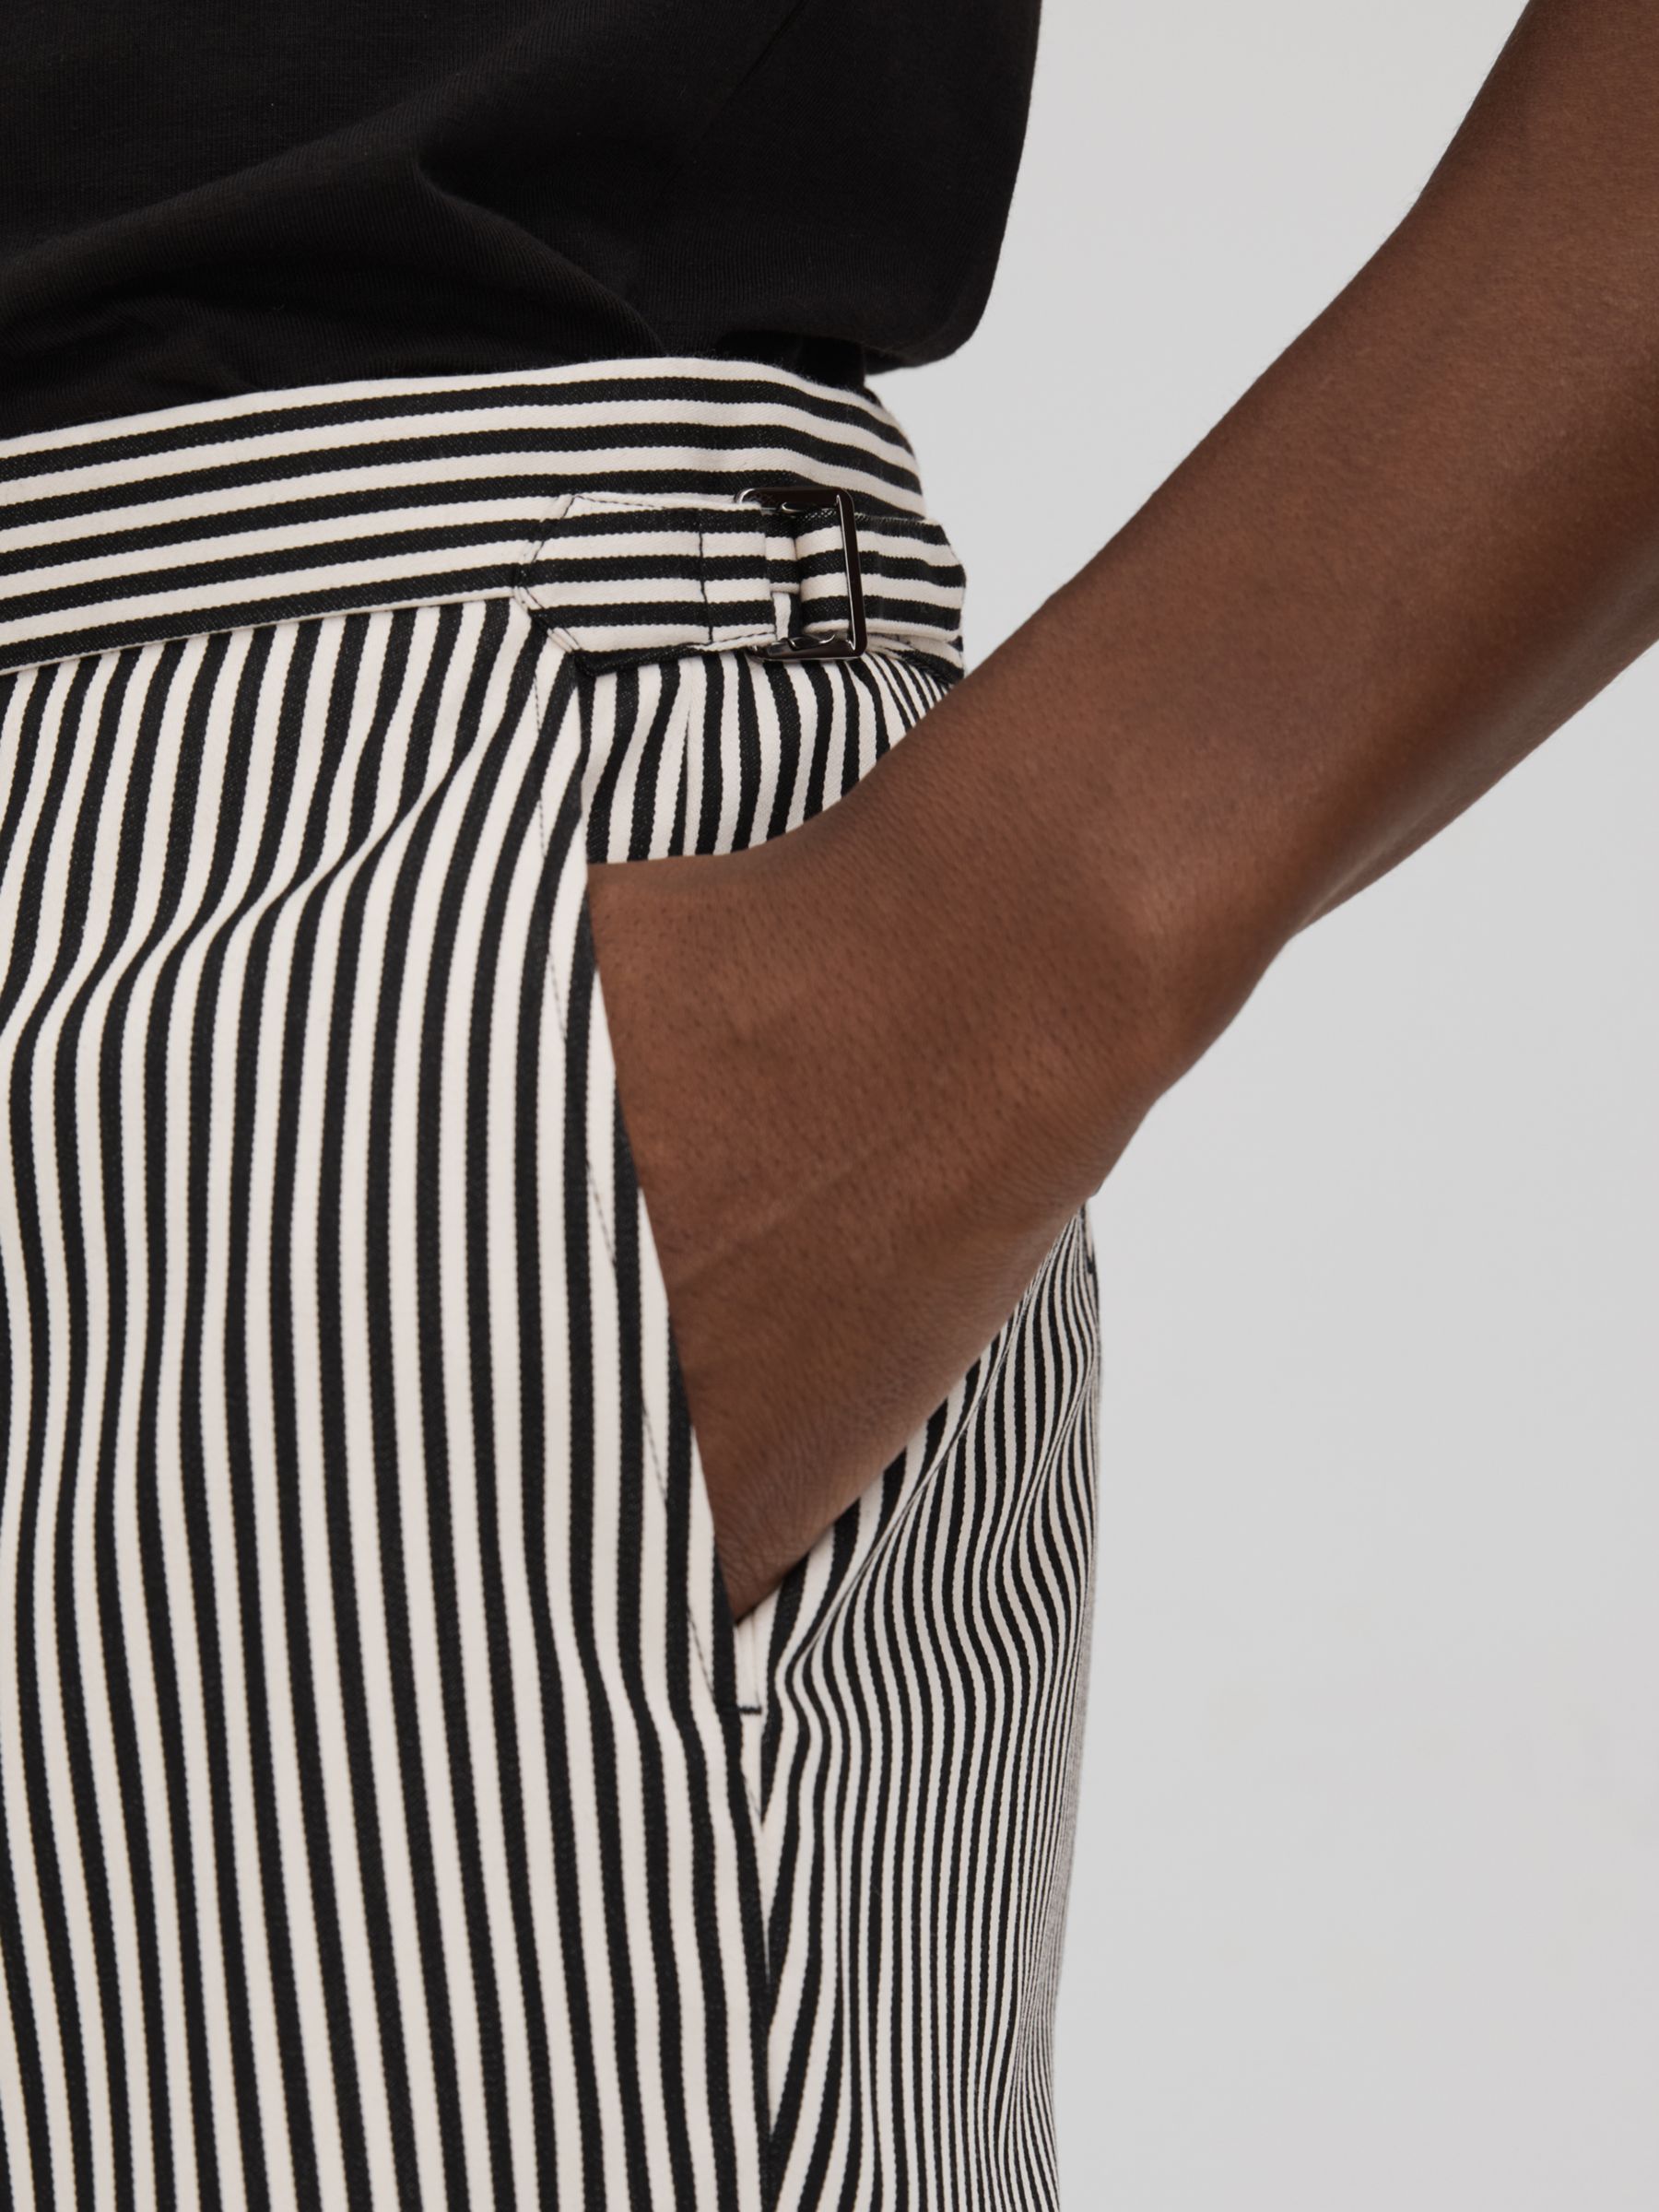 Reiss Stream Stripe Shorts, Black/White, 28R